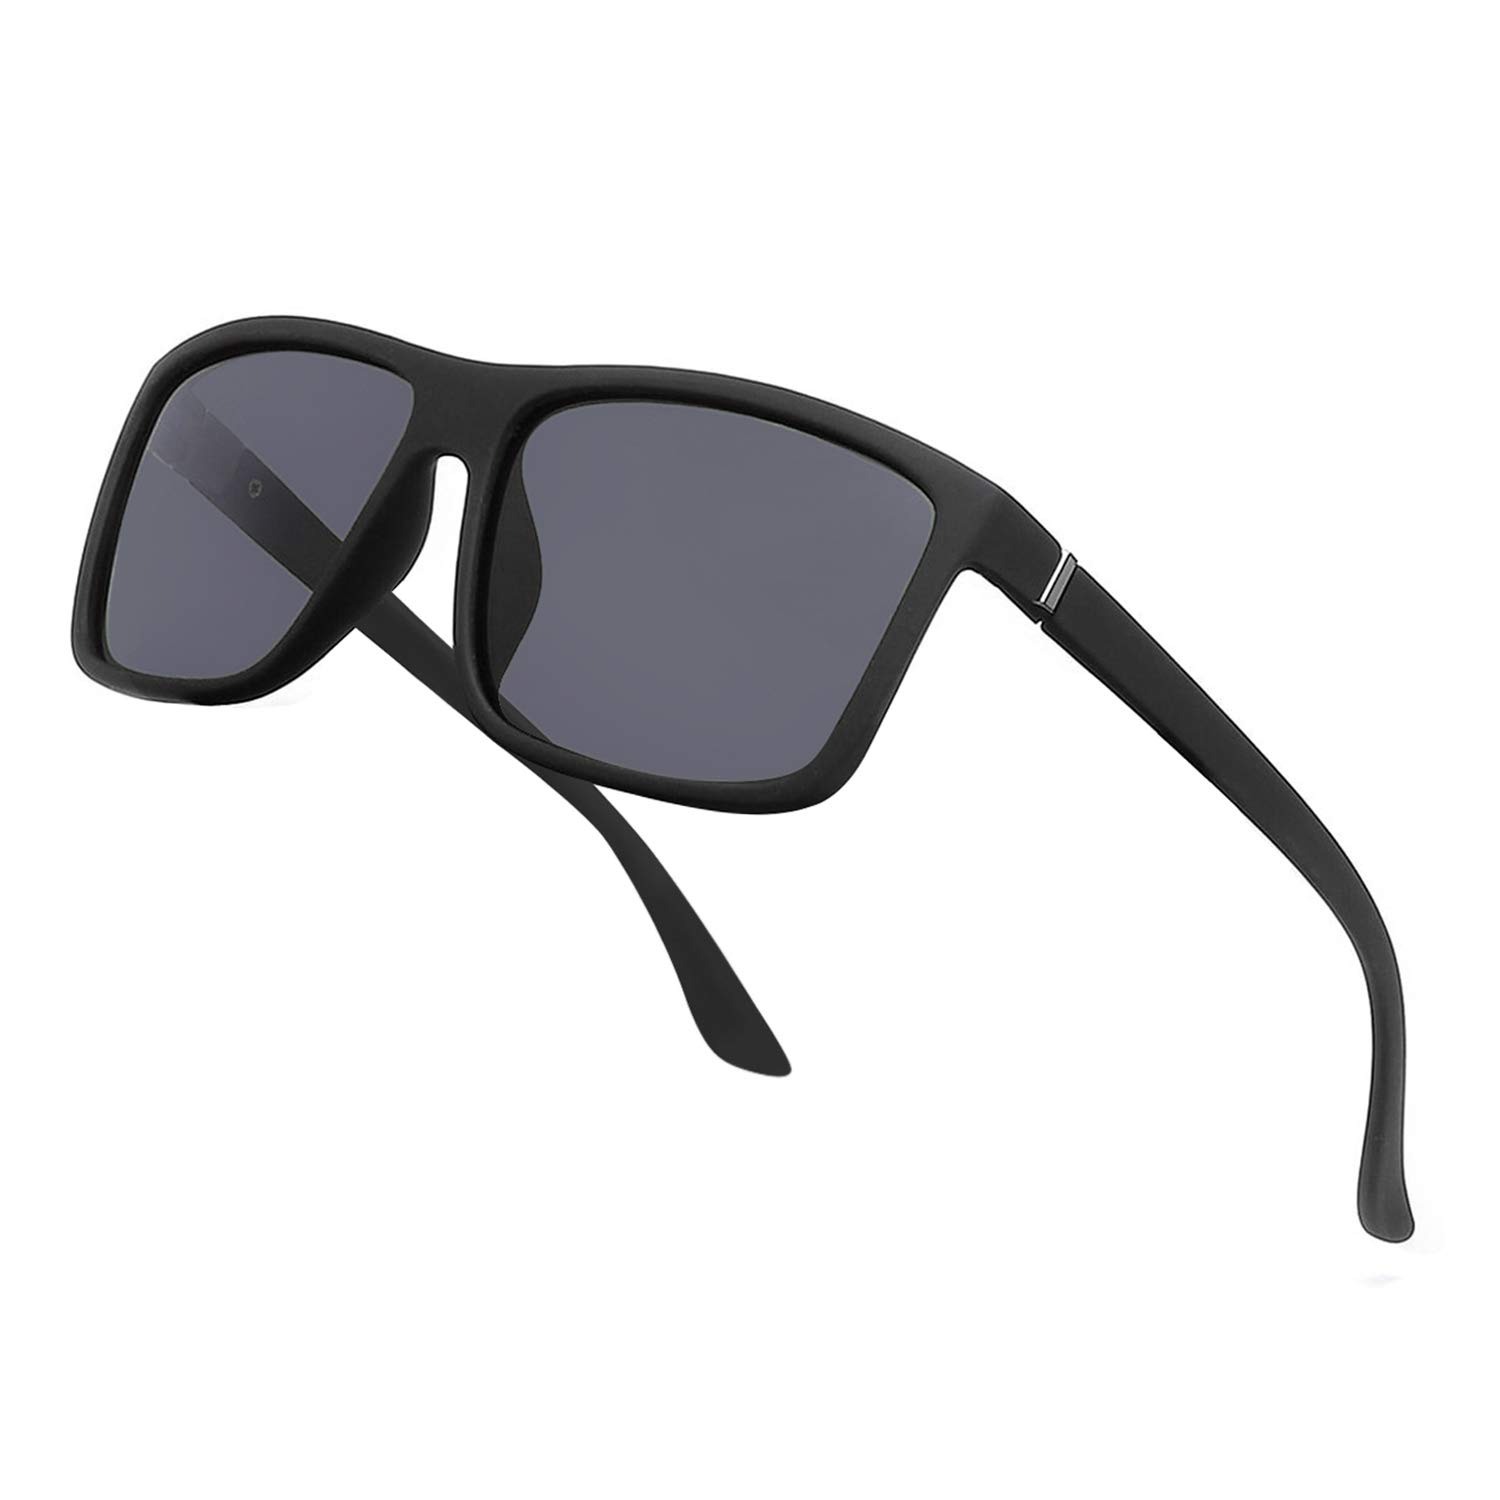 NIEEPA Mens Driving Sports Polarized Sunglasses Square Wayfarer Plastic Frame glasses (grey LensBlack Frame)